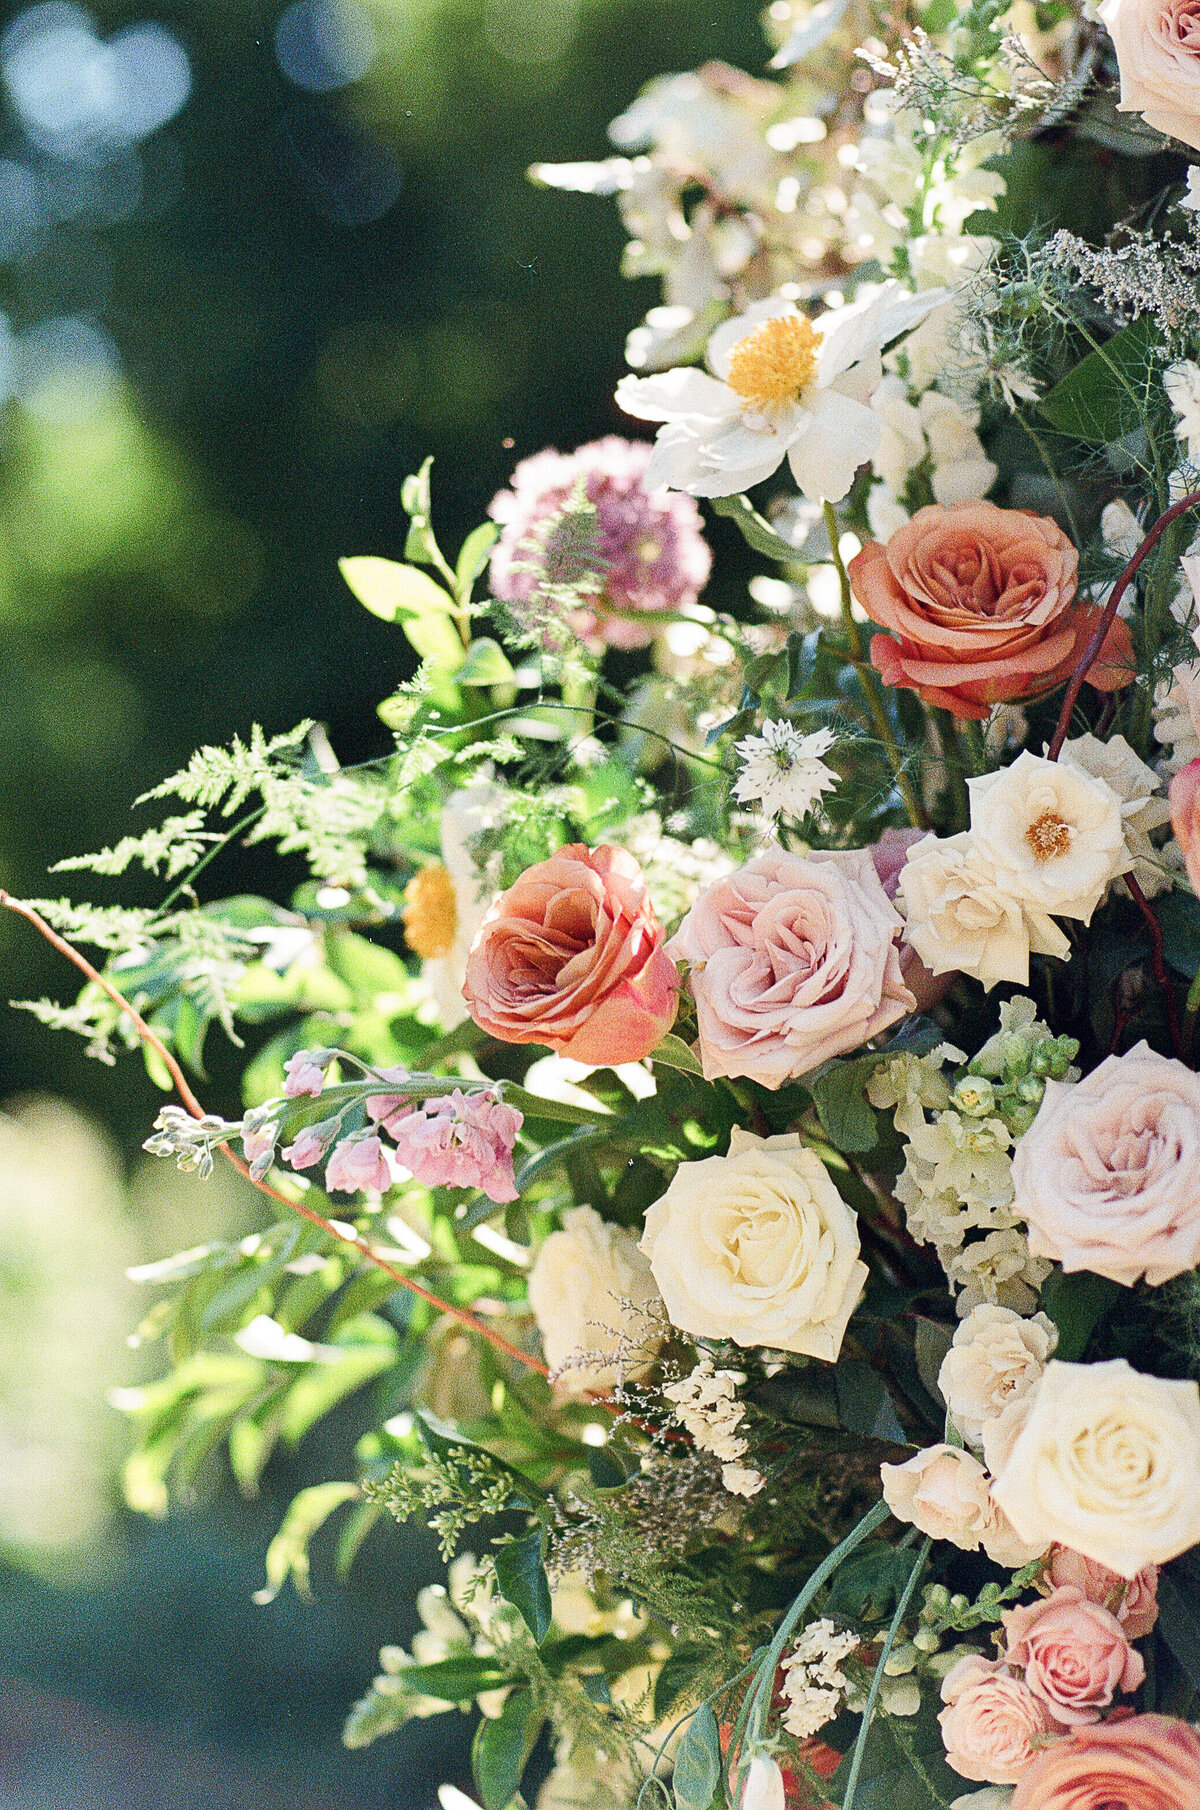 Sarah Rae Floral Designs Wedding Event Florist Flowers Kentucky Chic Whimsical Romantic Weddings8